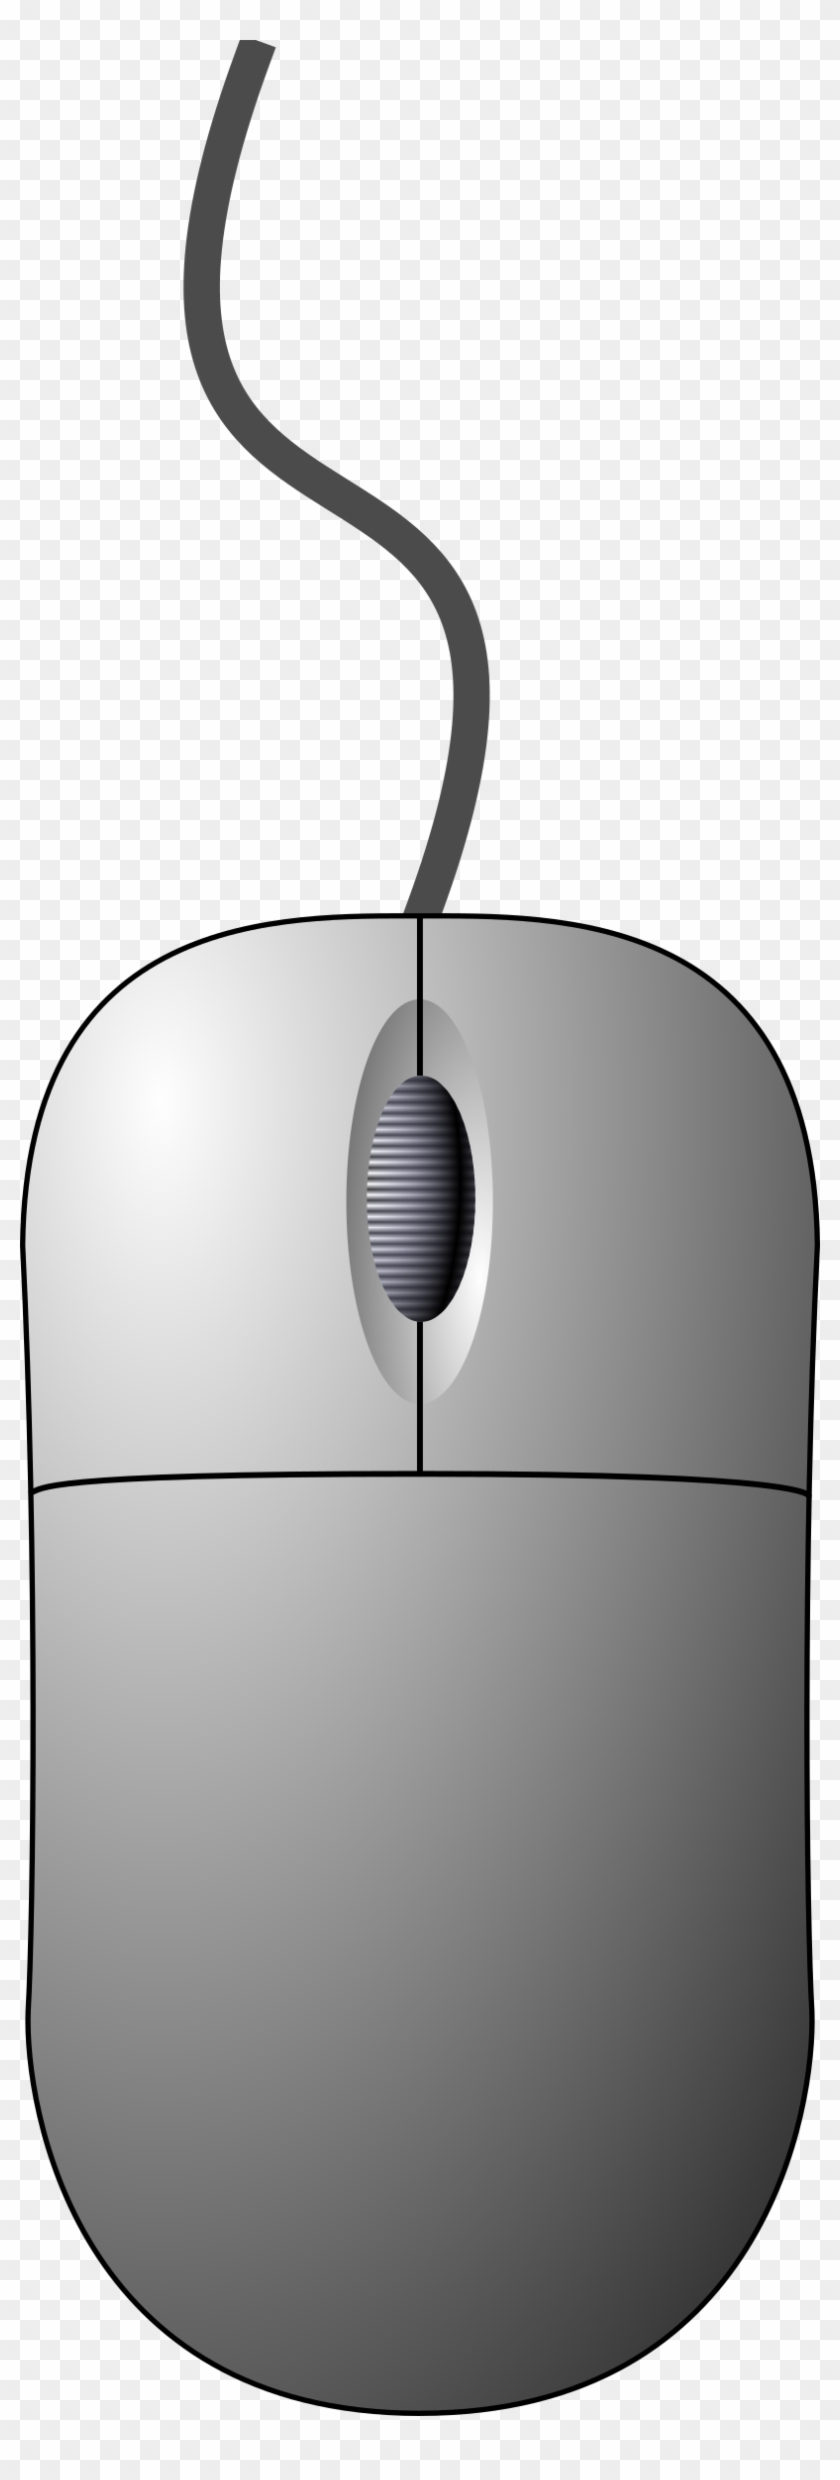 Big Image - Computer Mouse Clip Art #274525